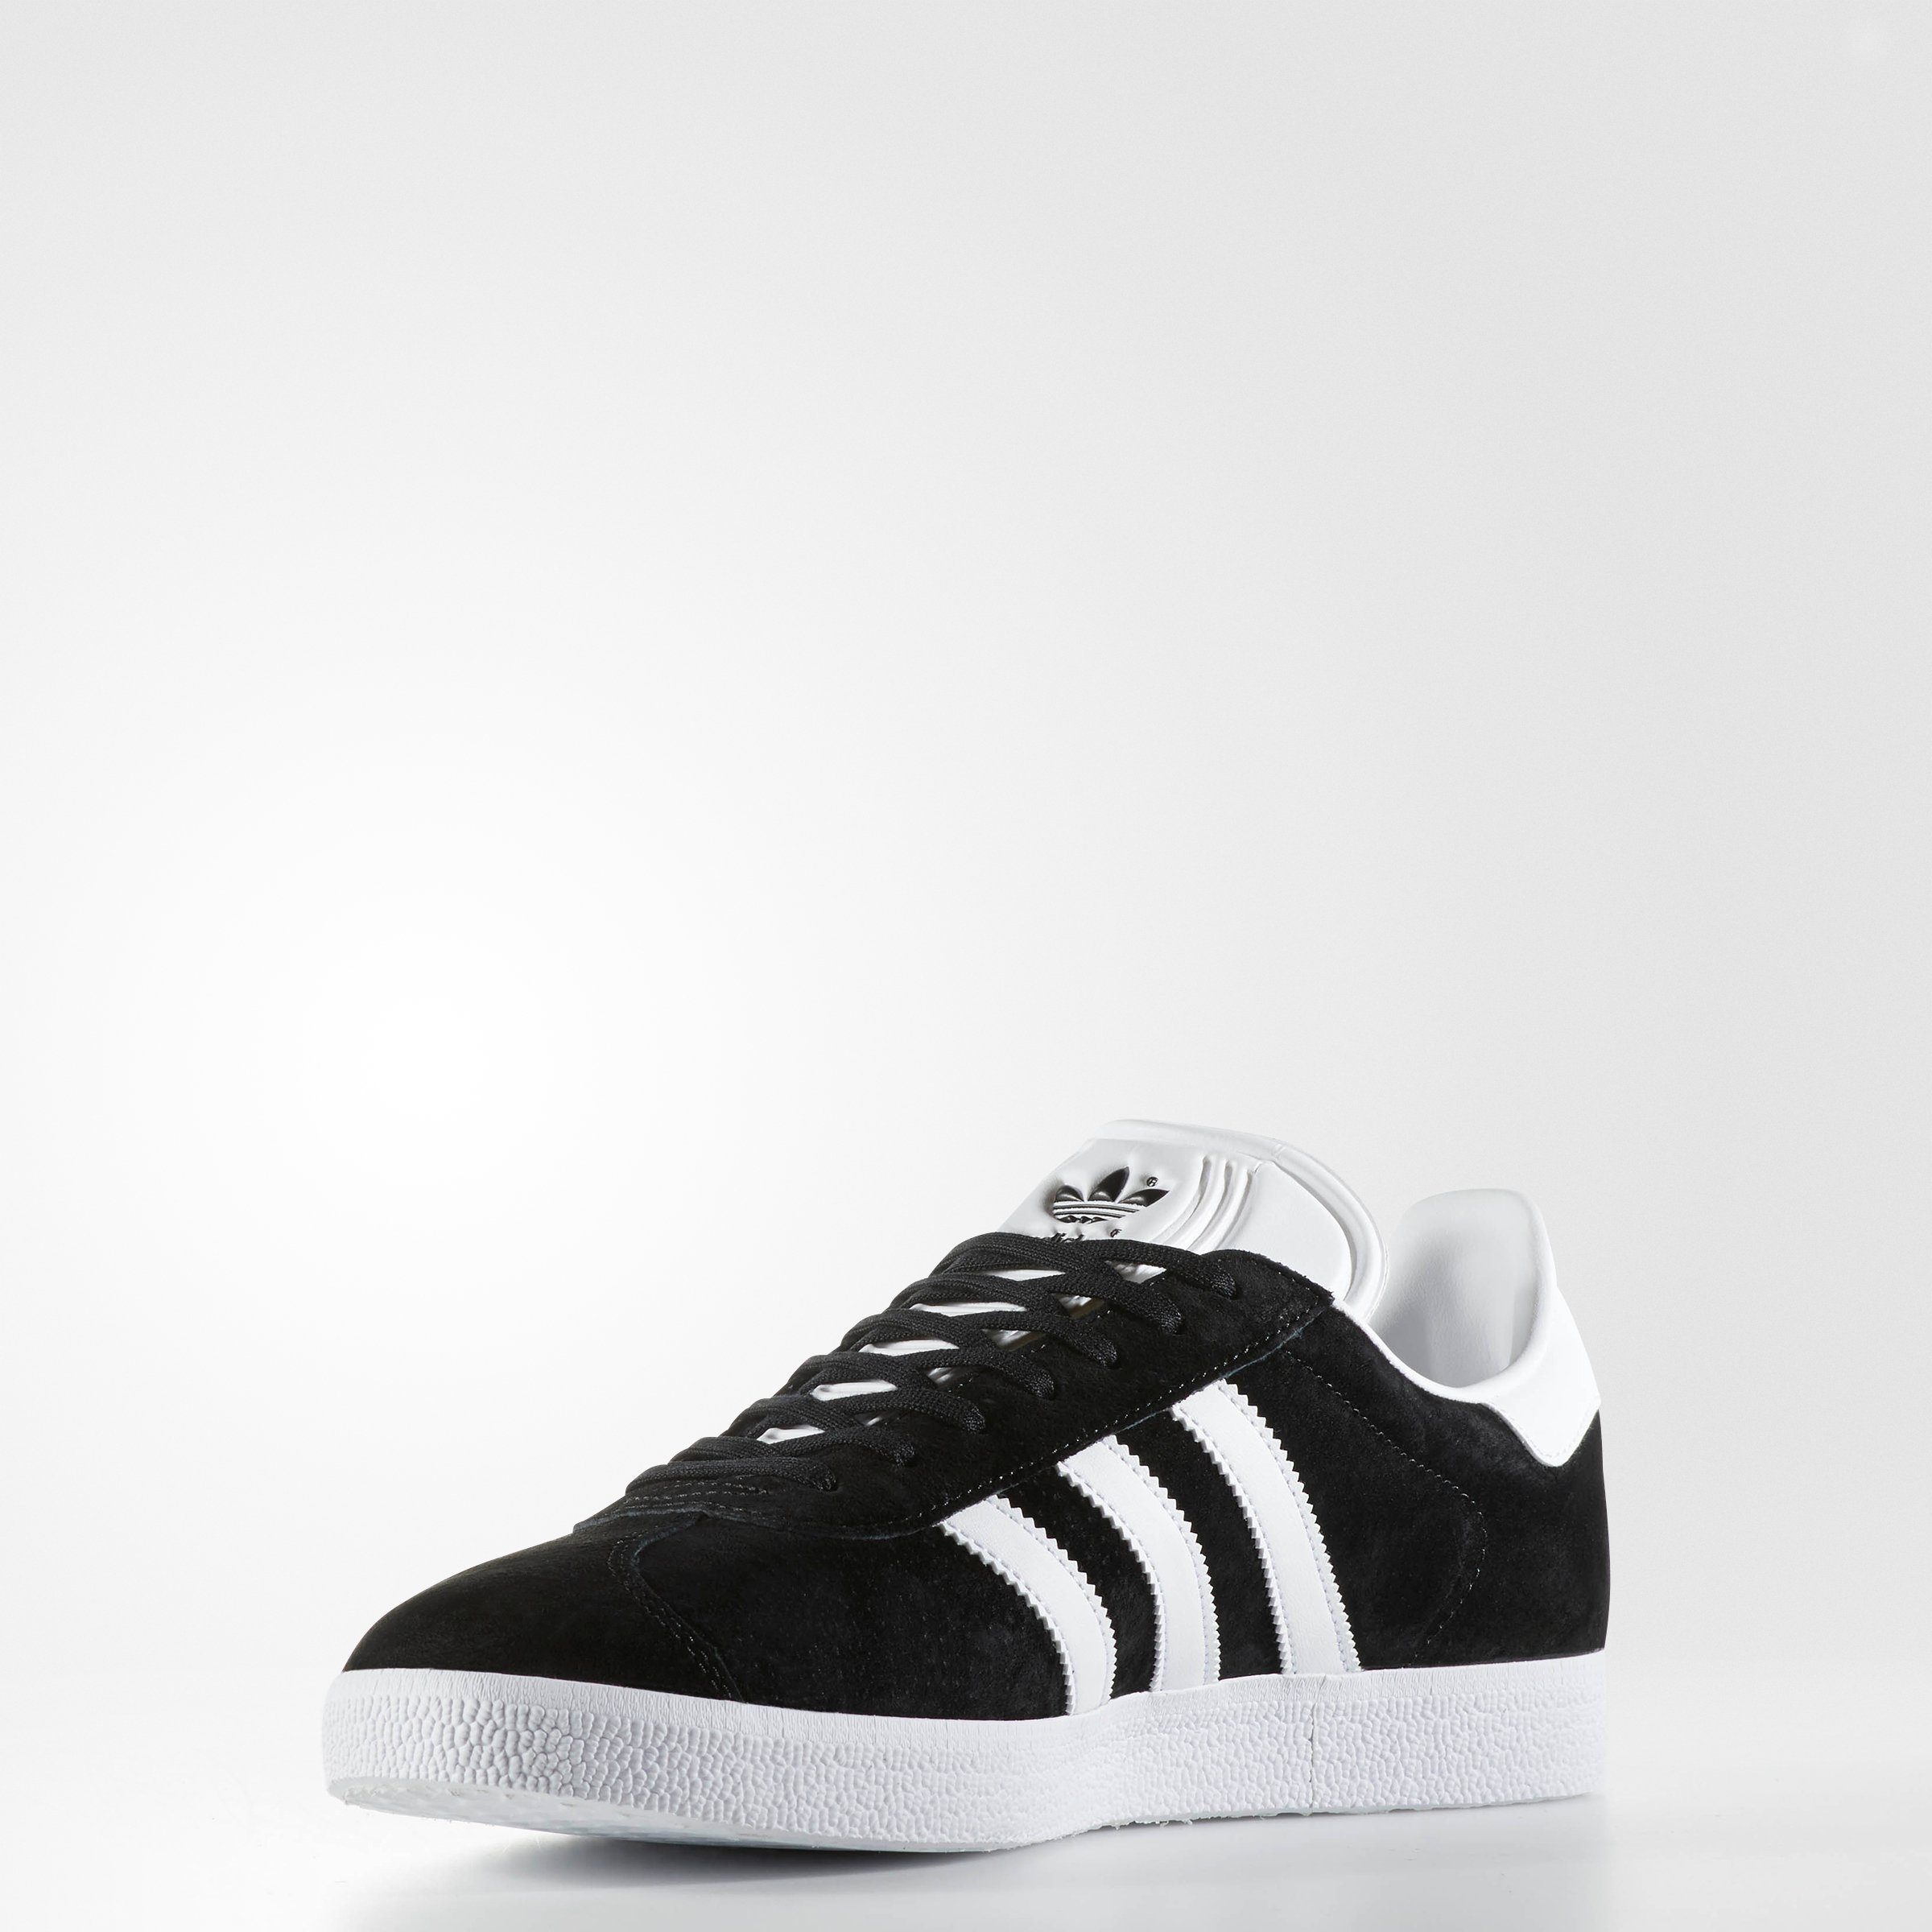 CBLACK-WHITE-GOLDMT Sneaker Originals adidas GAZELLE